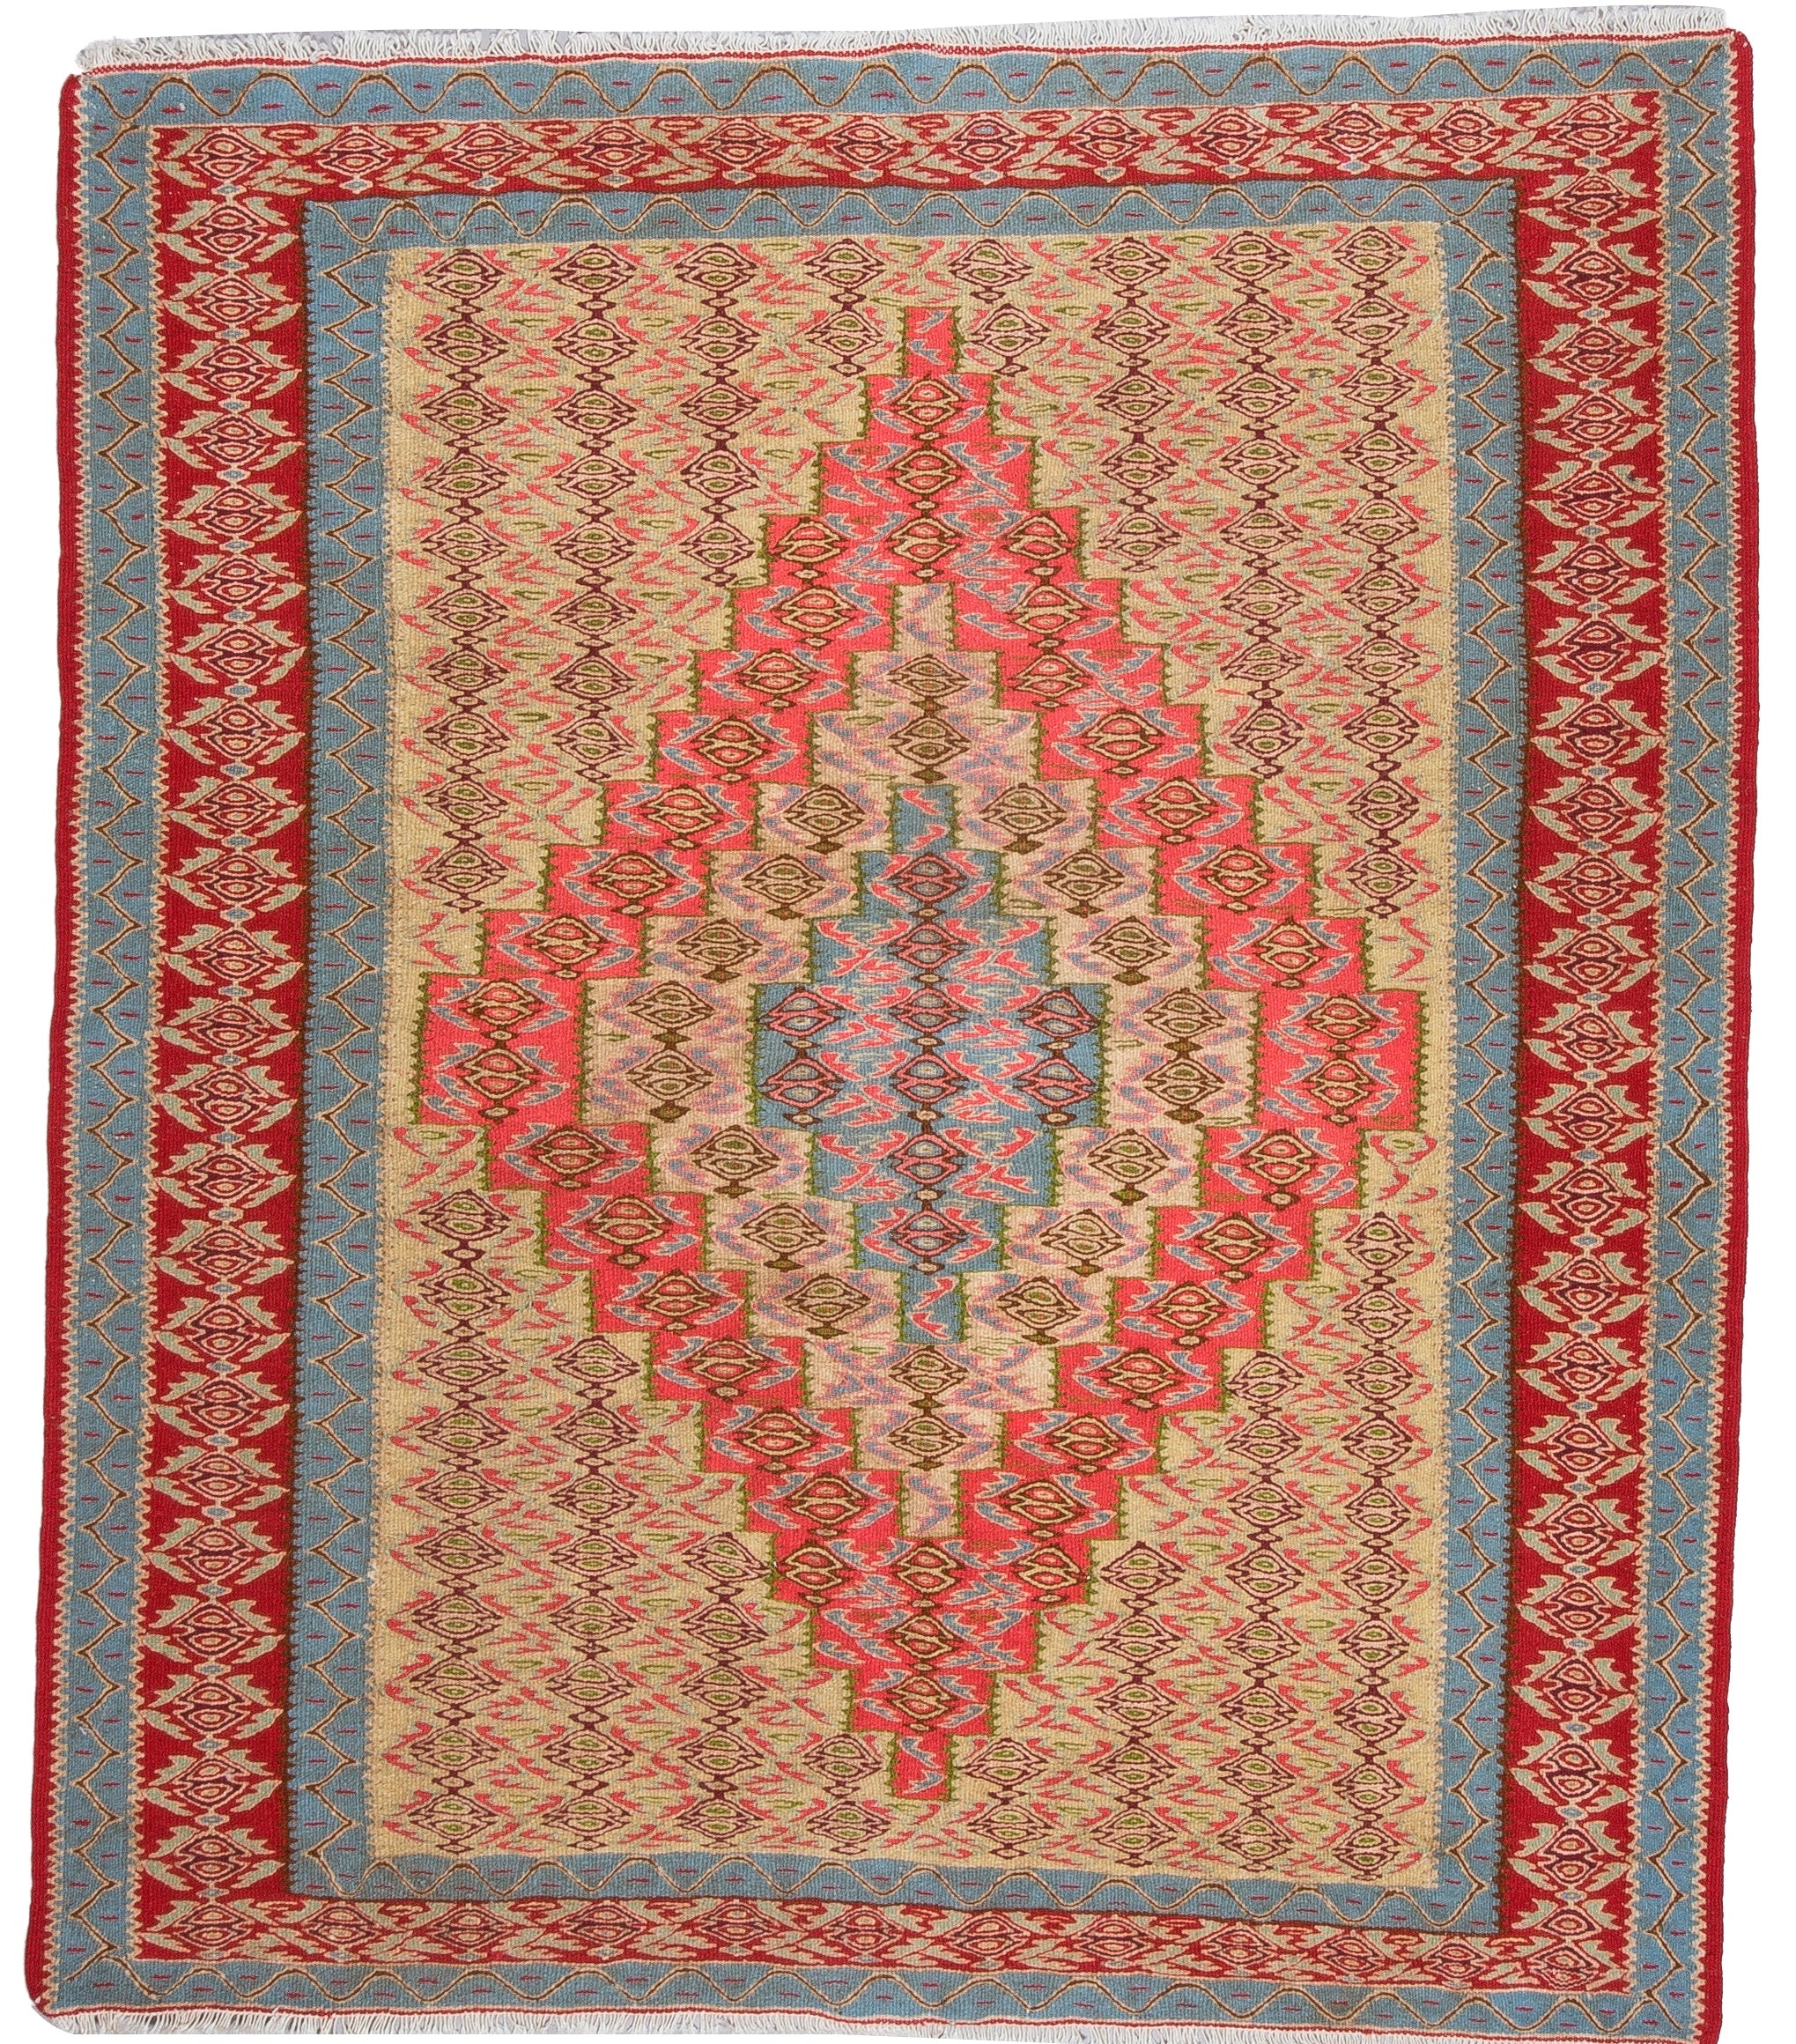 Vintage Persian Rug Kilim 4 x 4 ft Terracotta Orange and Green Boho Rustic Senneh Floor Rug